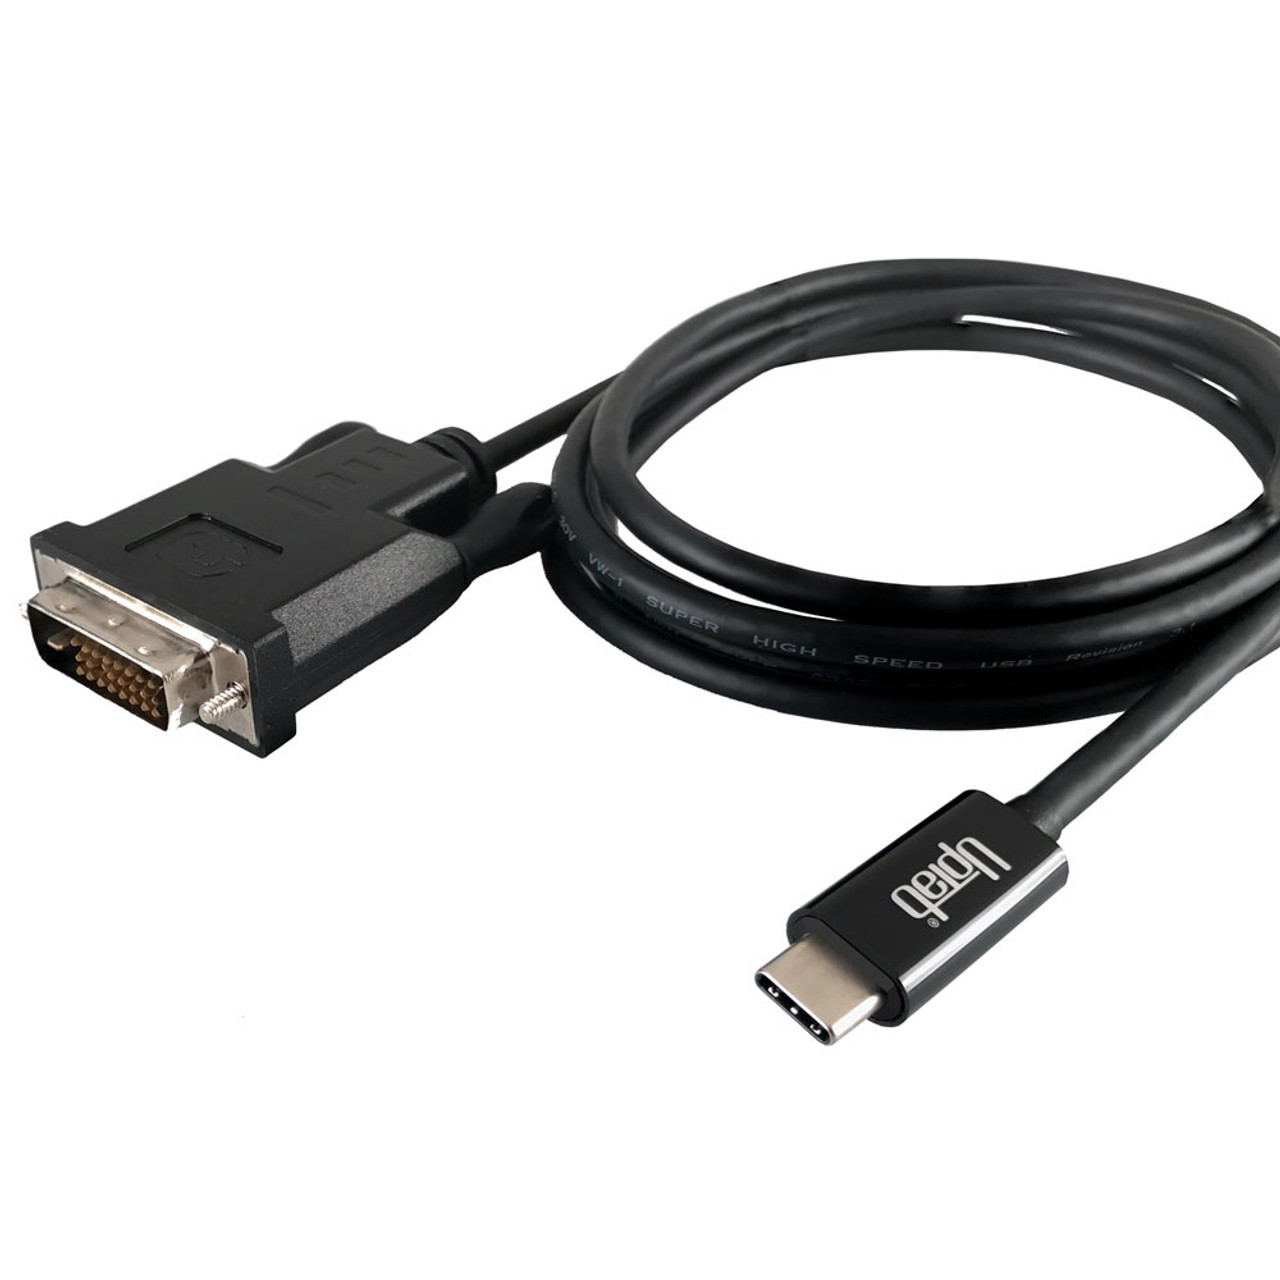 USB-C (Type C) to DVI-D Cable - UPTab